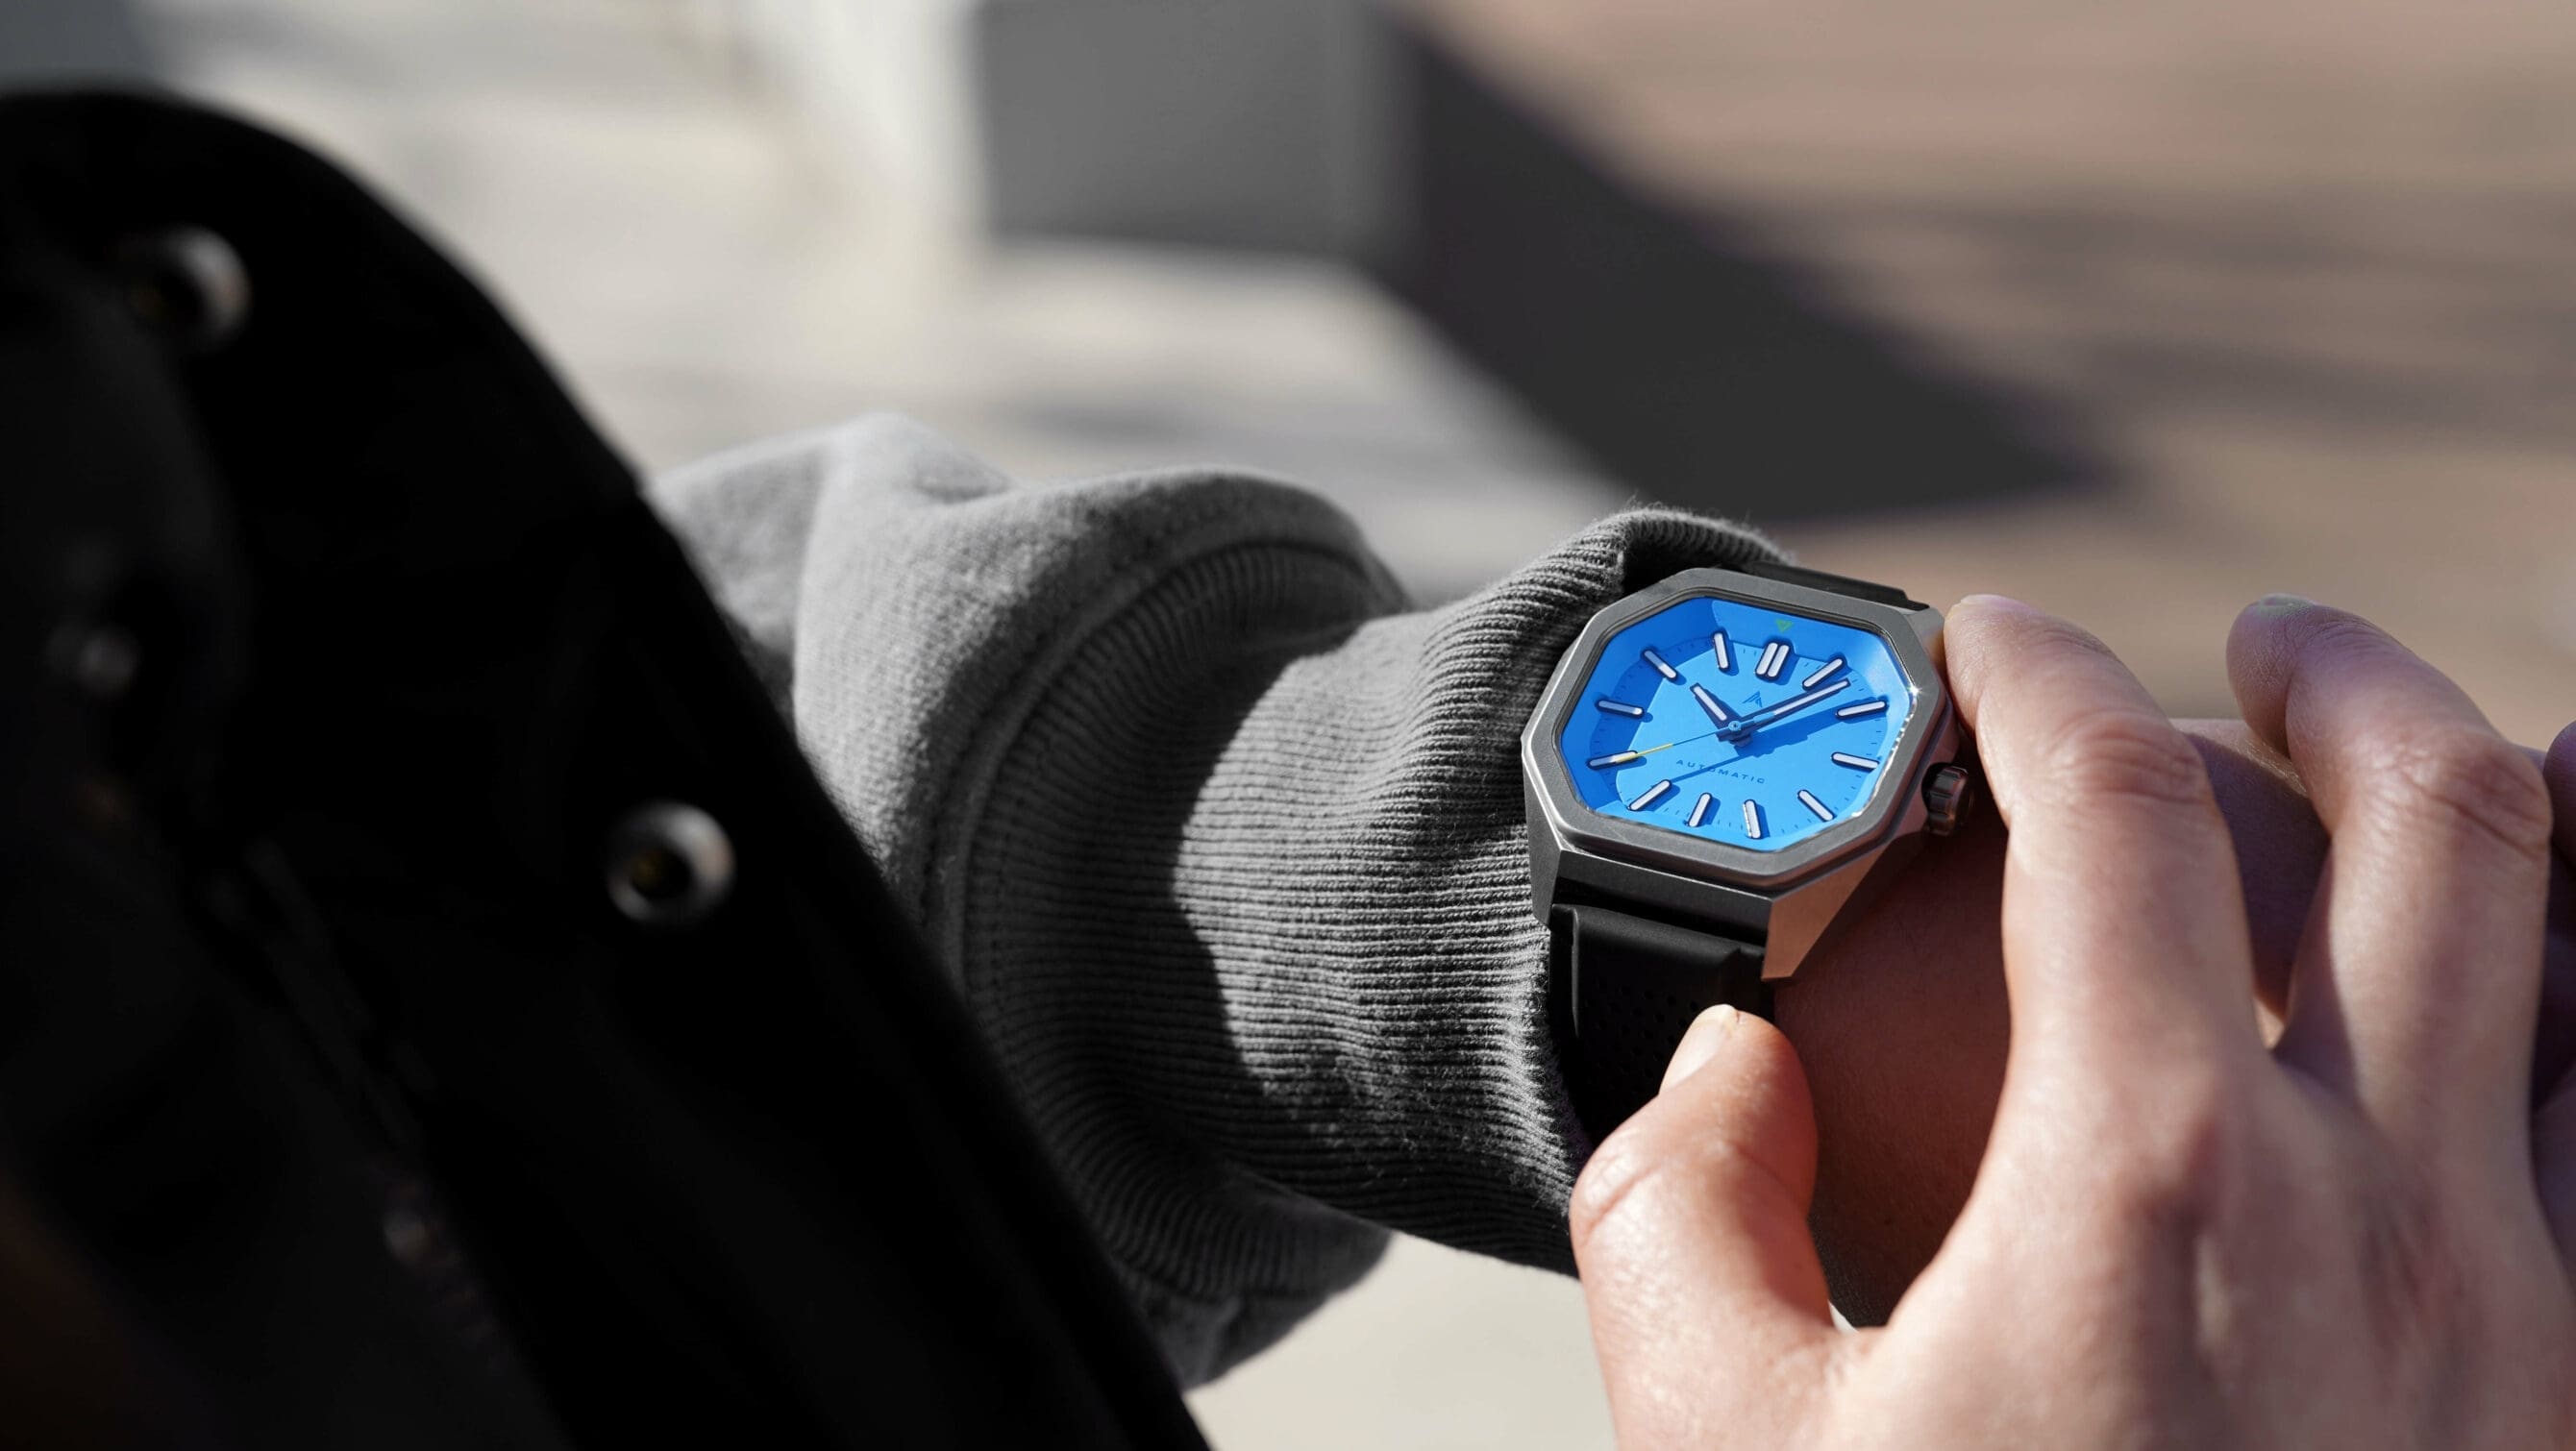 A futuristic wolf of a watch: the modern and angular Namica Okami